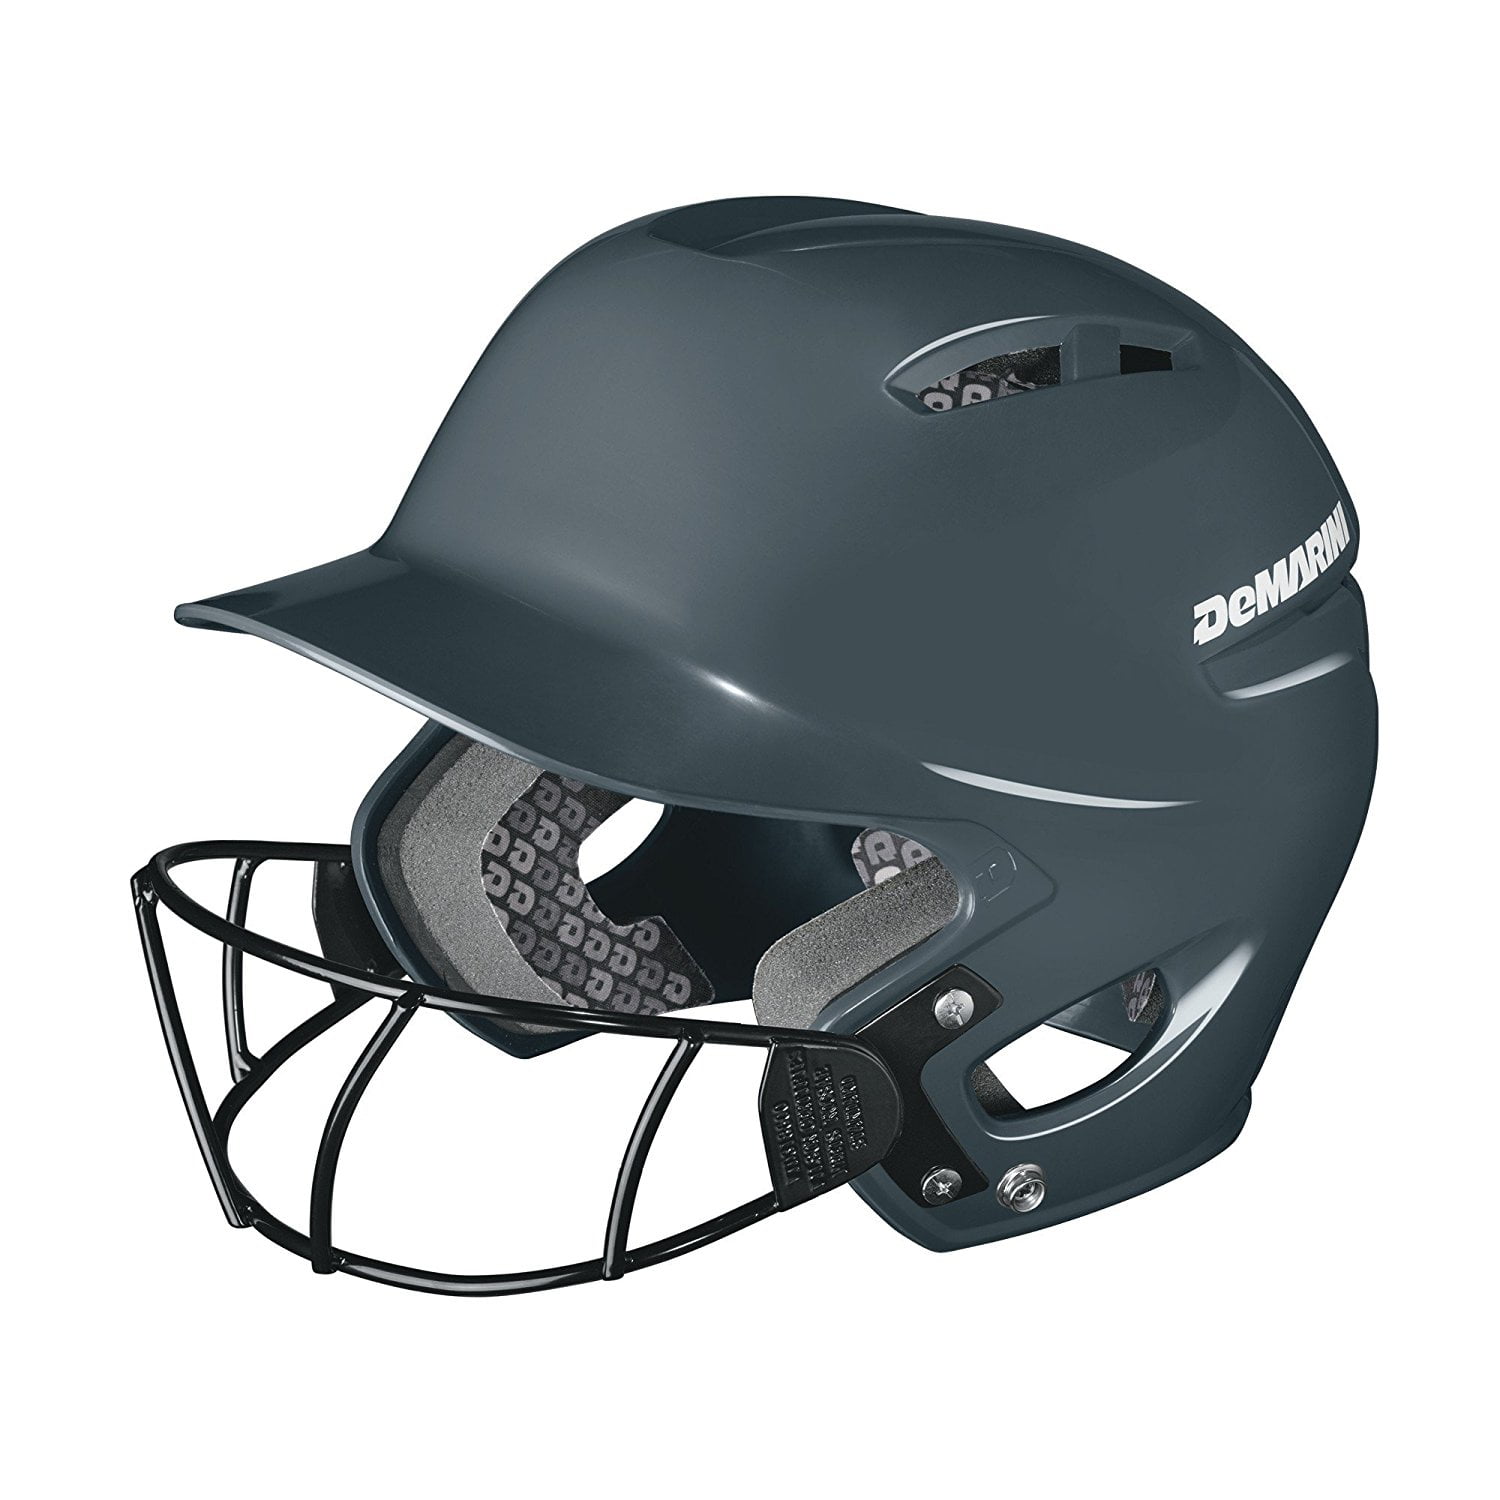 DeMarini Paradox Protege Pro Batting Helmet Scarlet Large/X-Large 